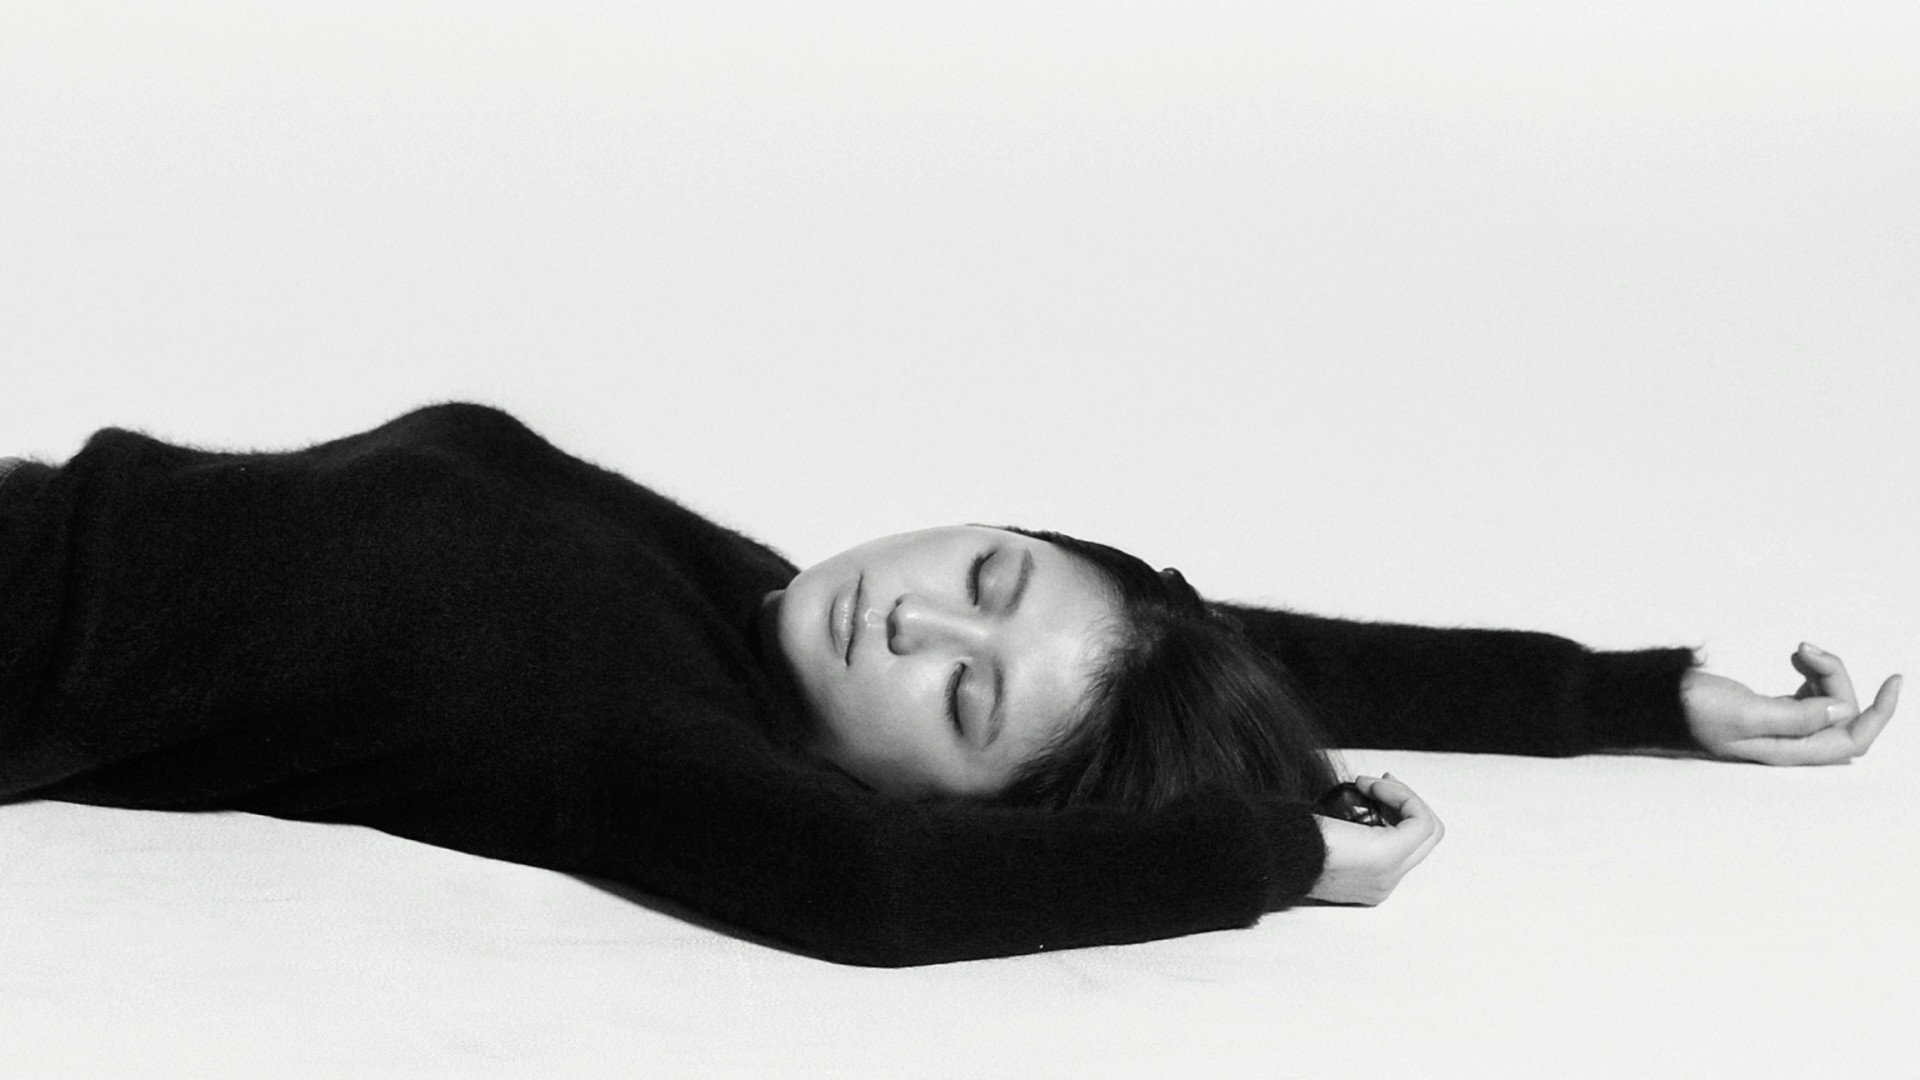 Masami Nagasawa, Lying down, Arms up, Closed eyes, Asian, Women, Black clothing, Simple background Wallpaper